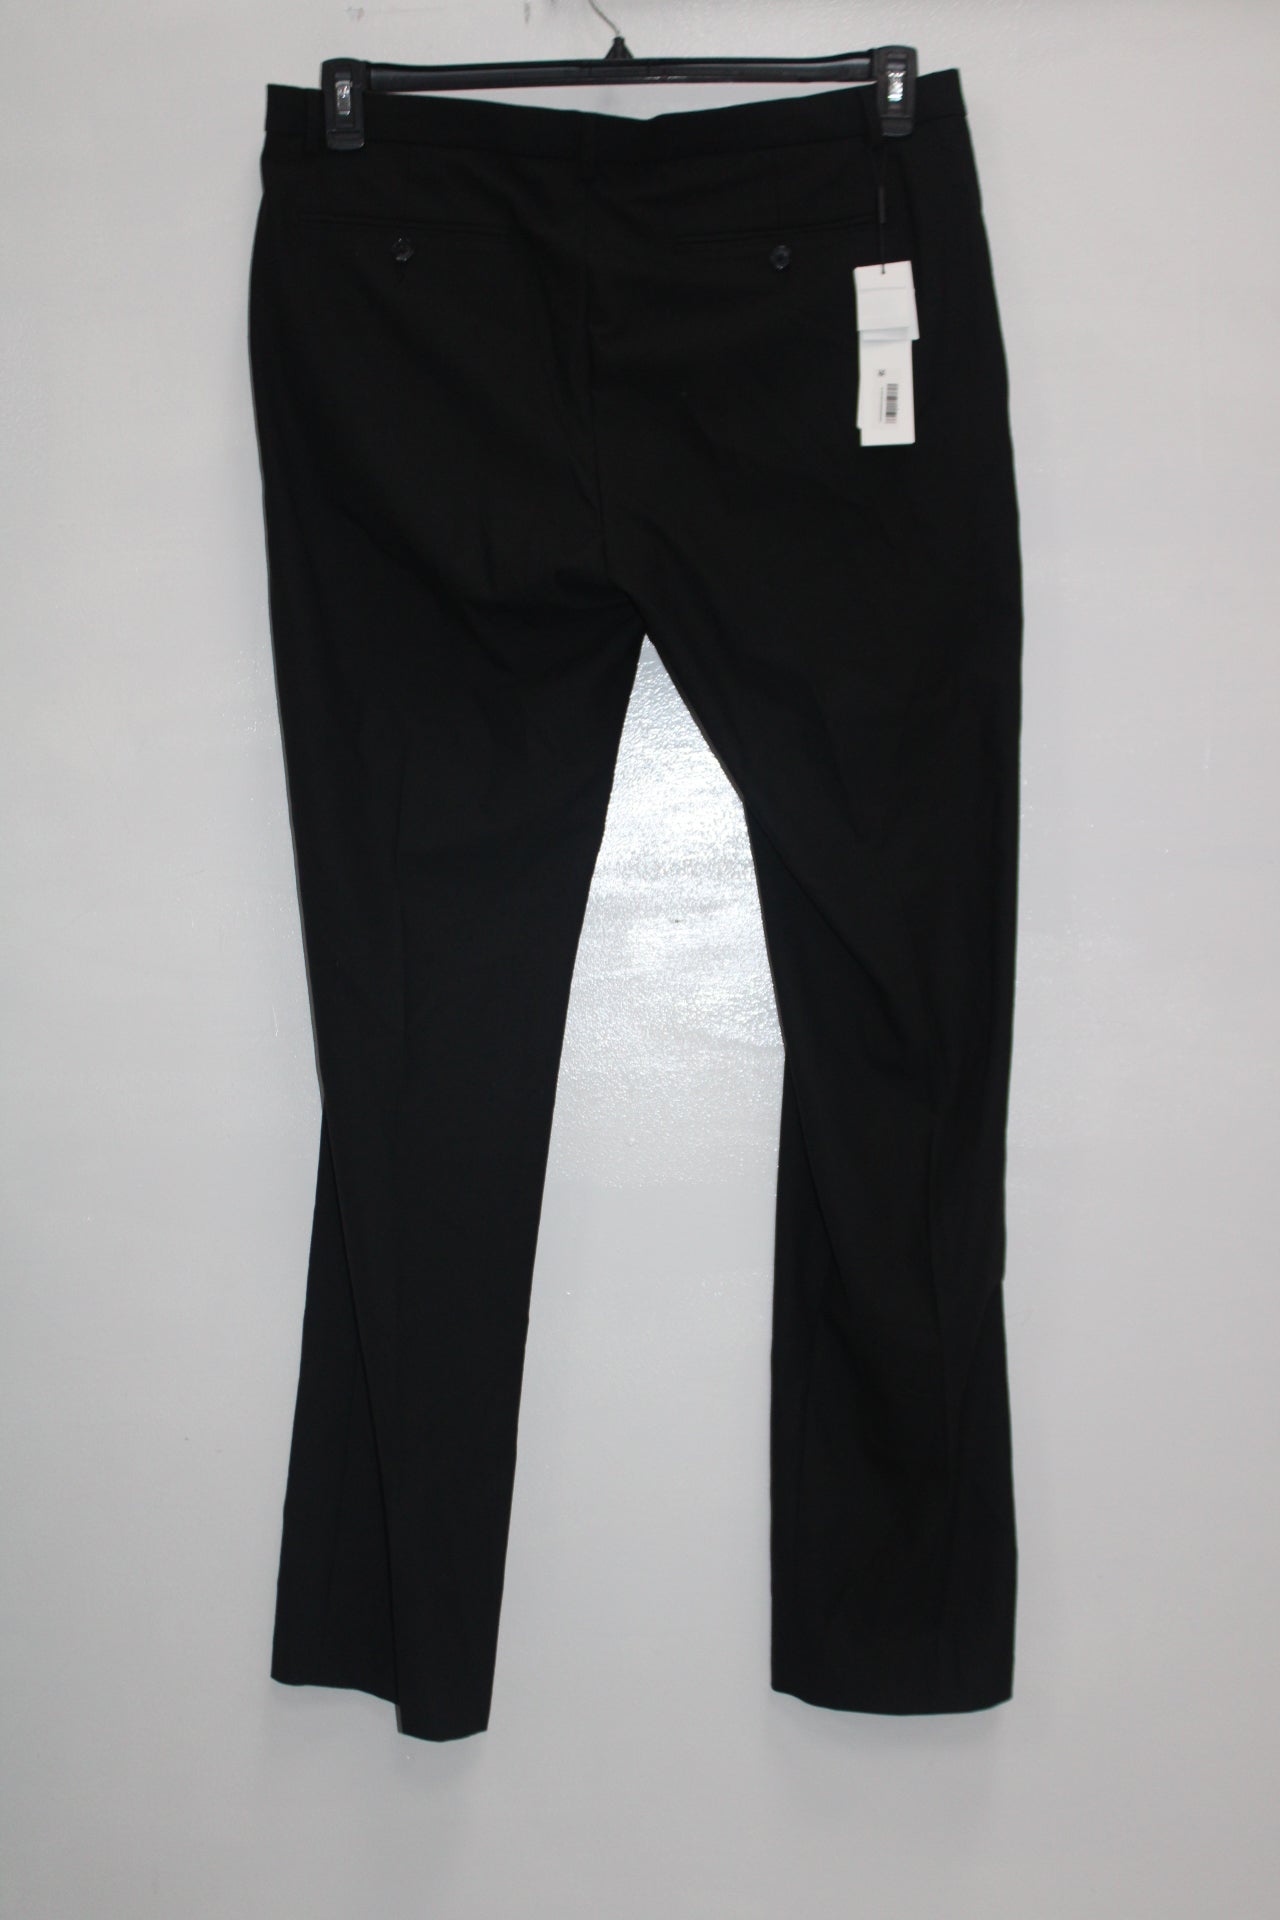 Calvin Klein Mens Edi Slim-Fit Pants Black 36x34